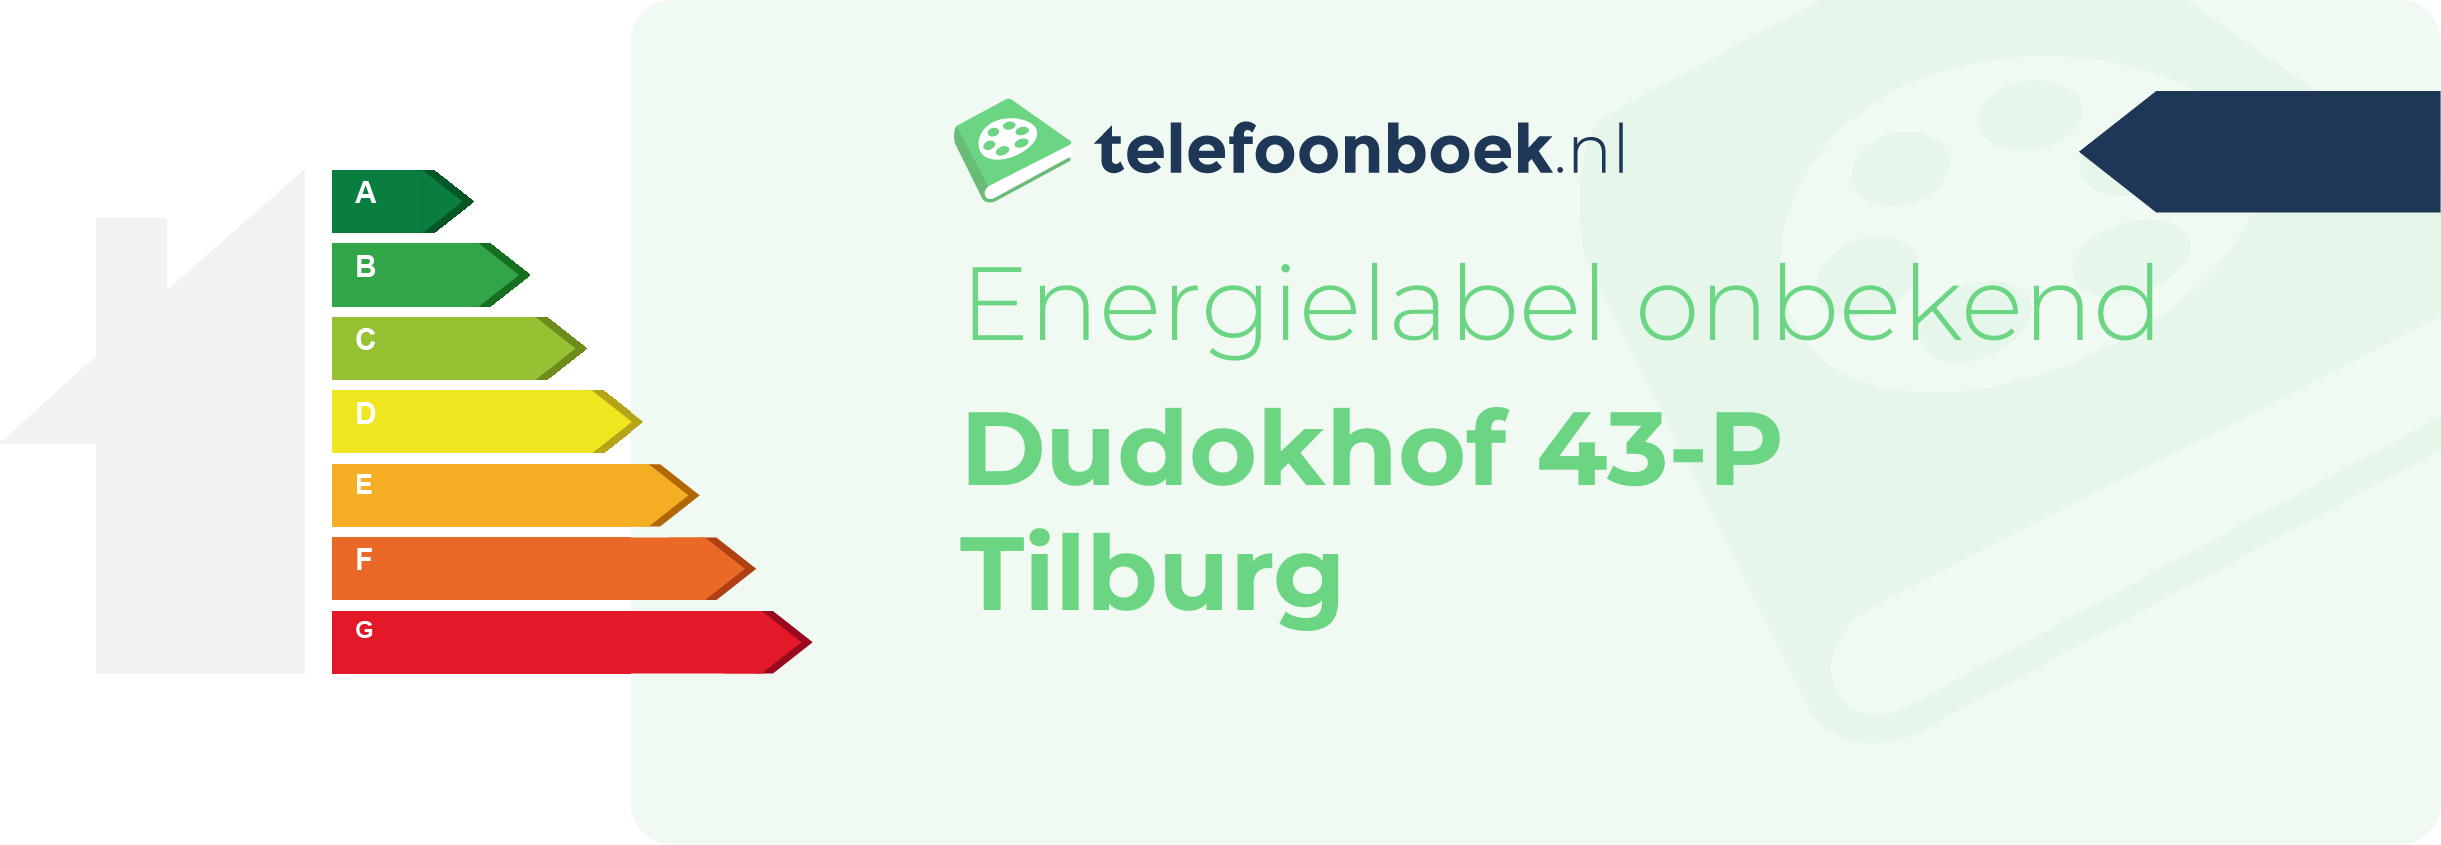 Energielabel Dudokhof 43-P Tilburg